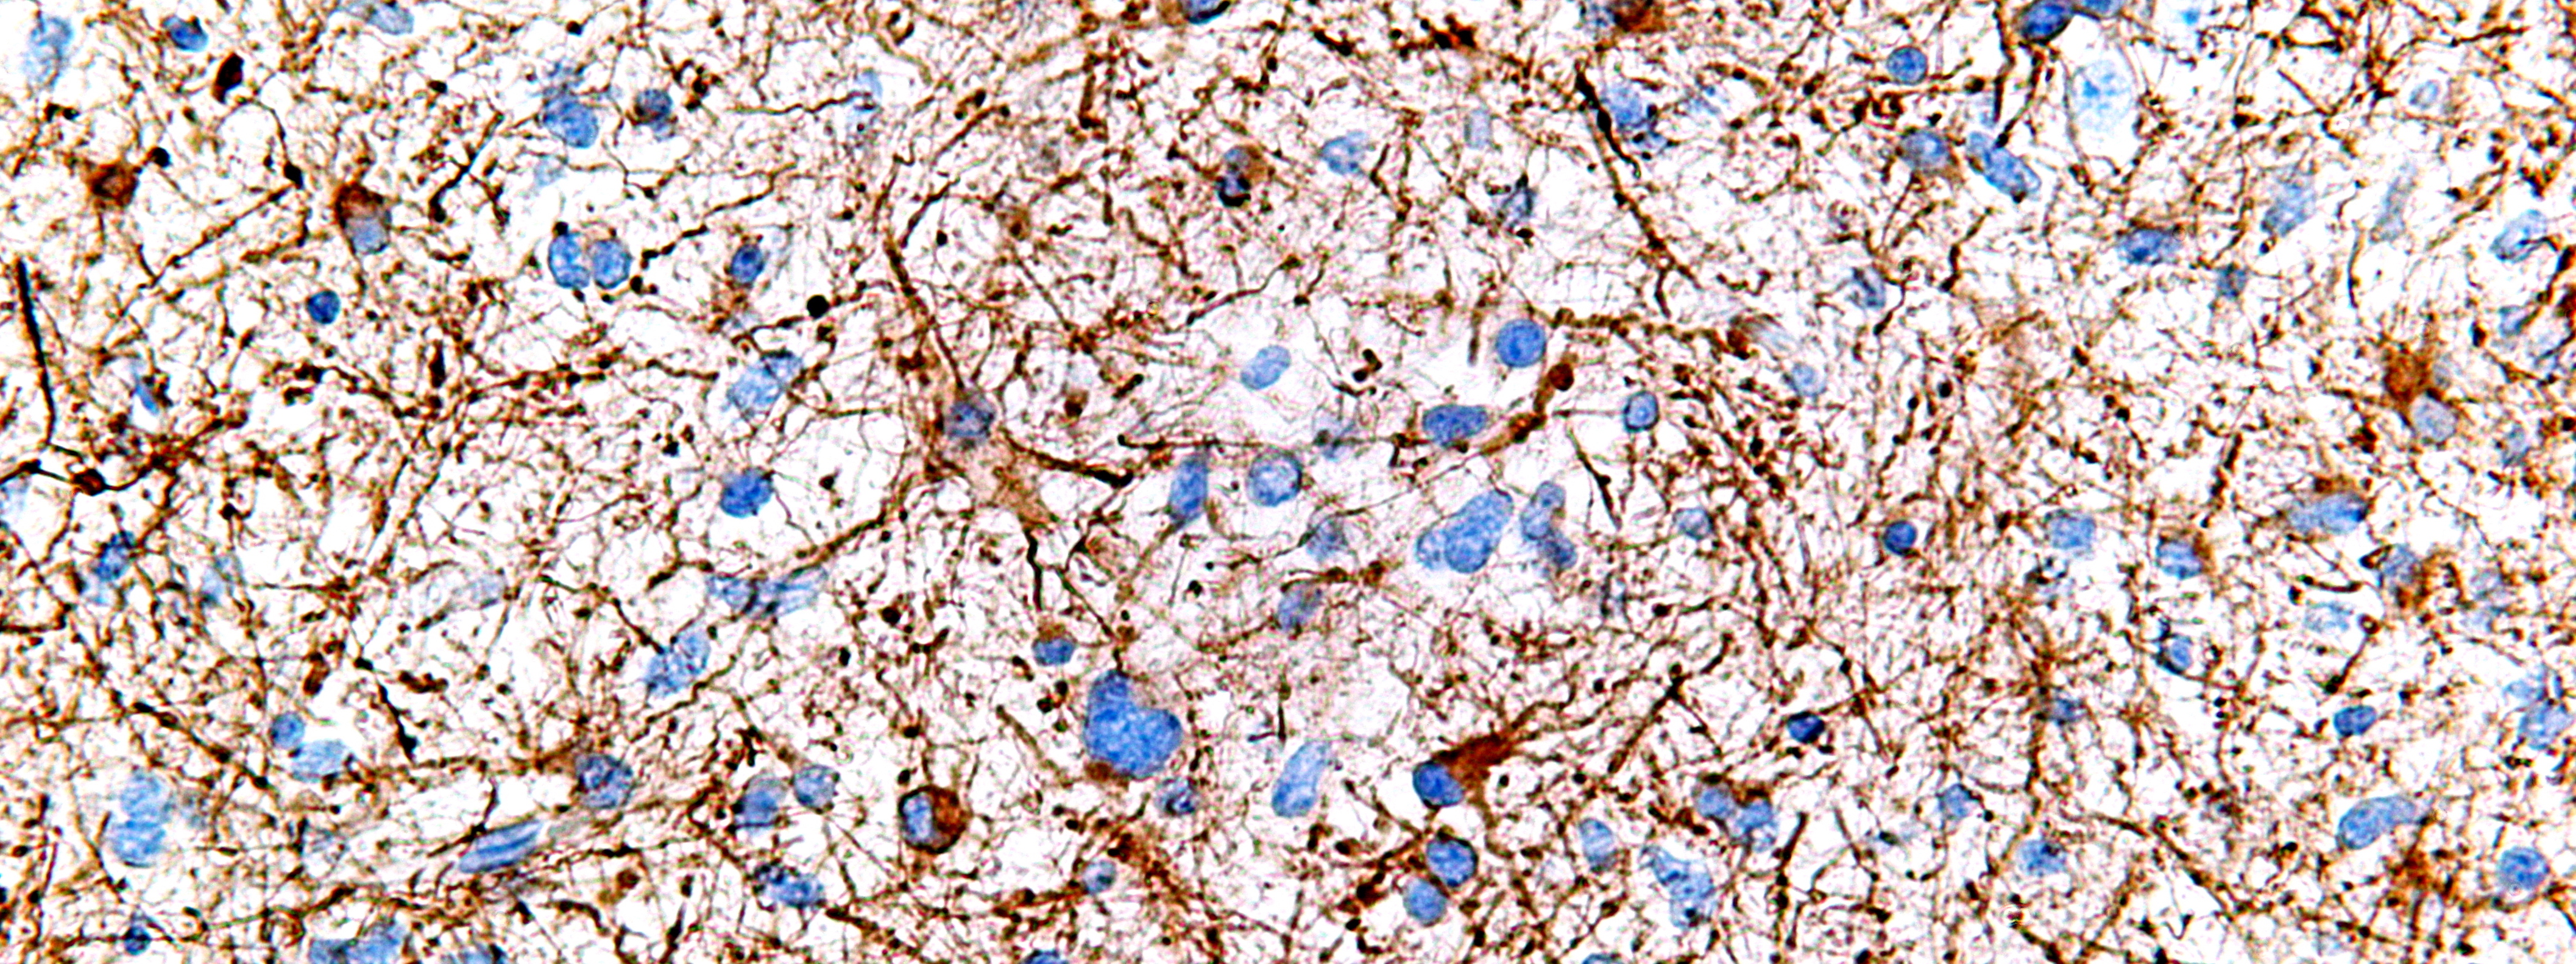 Las células gliales defectuosas se vinculan al Parkinson...